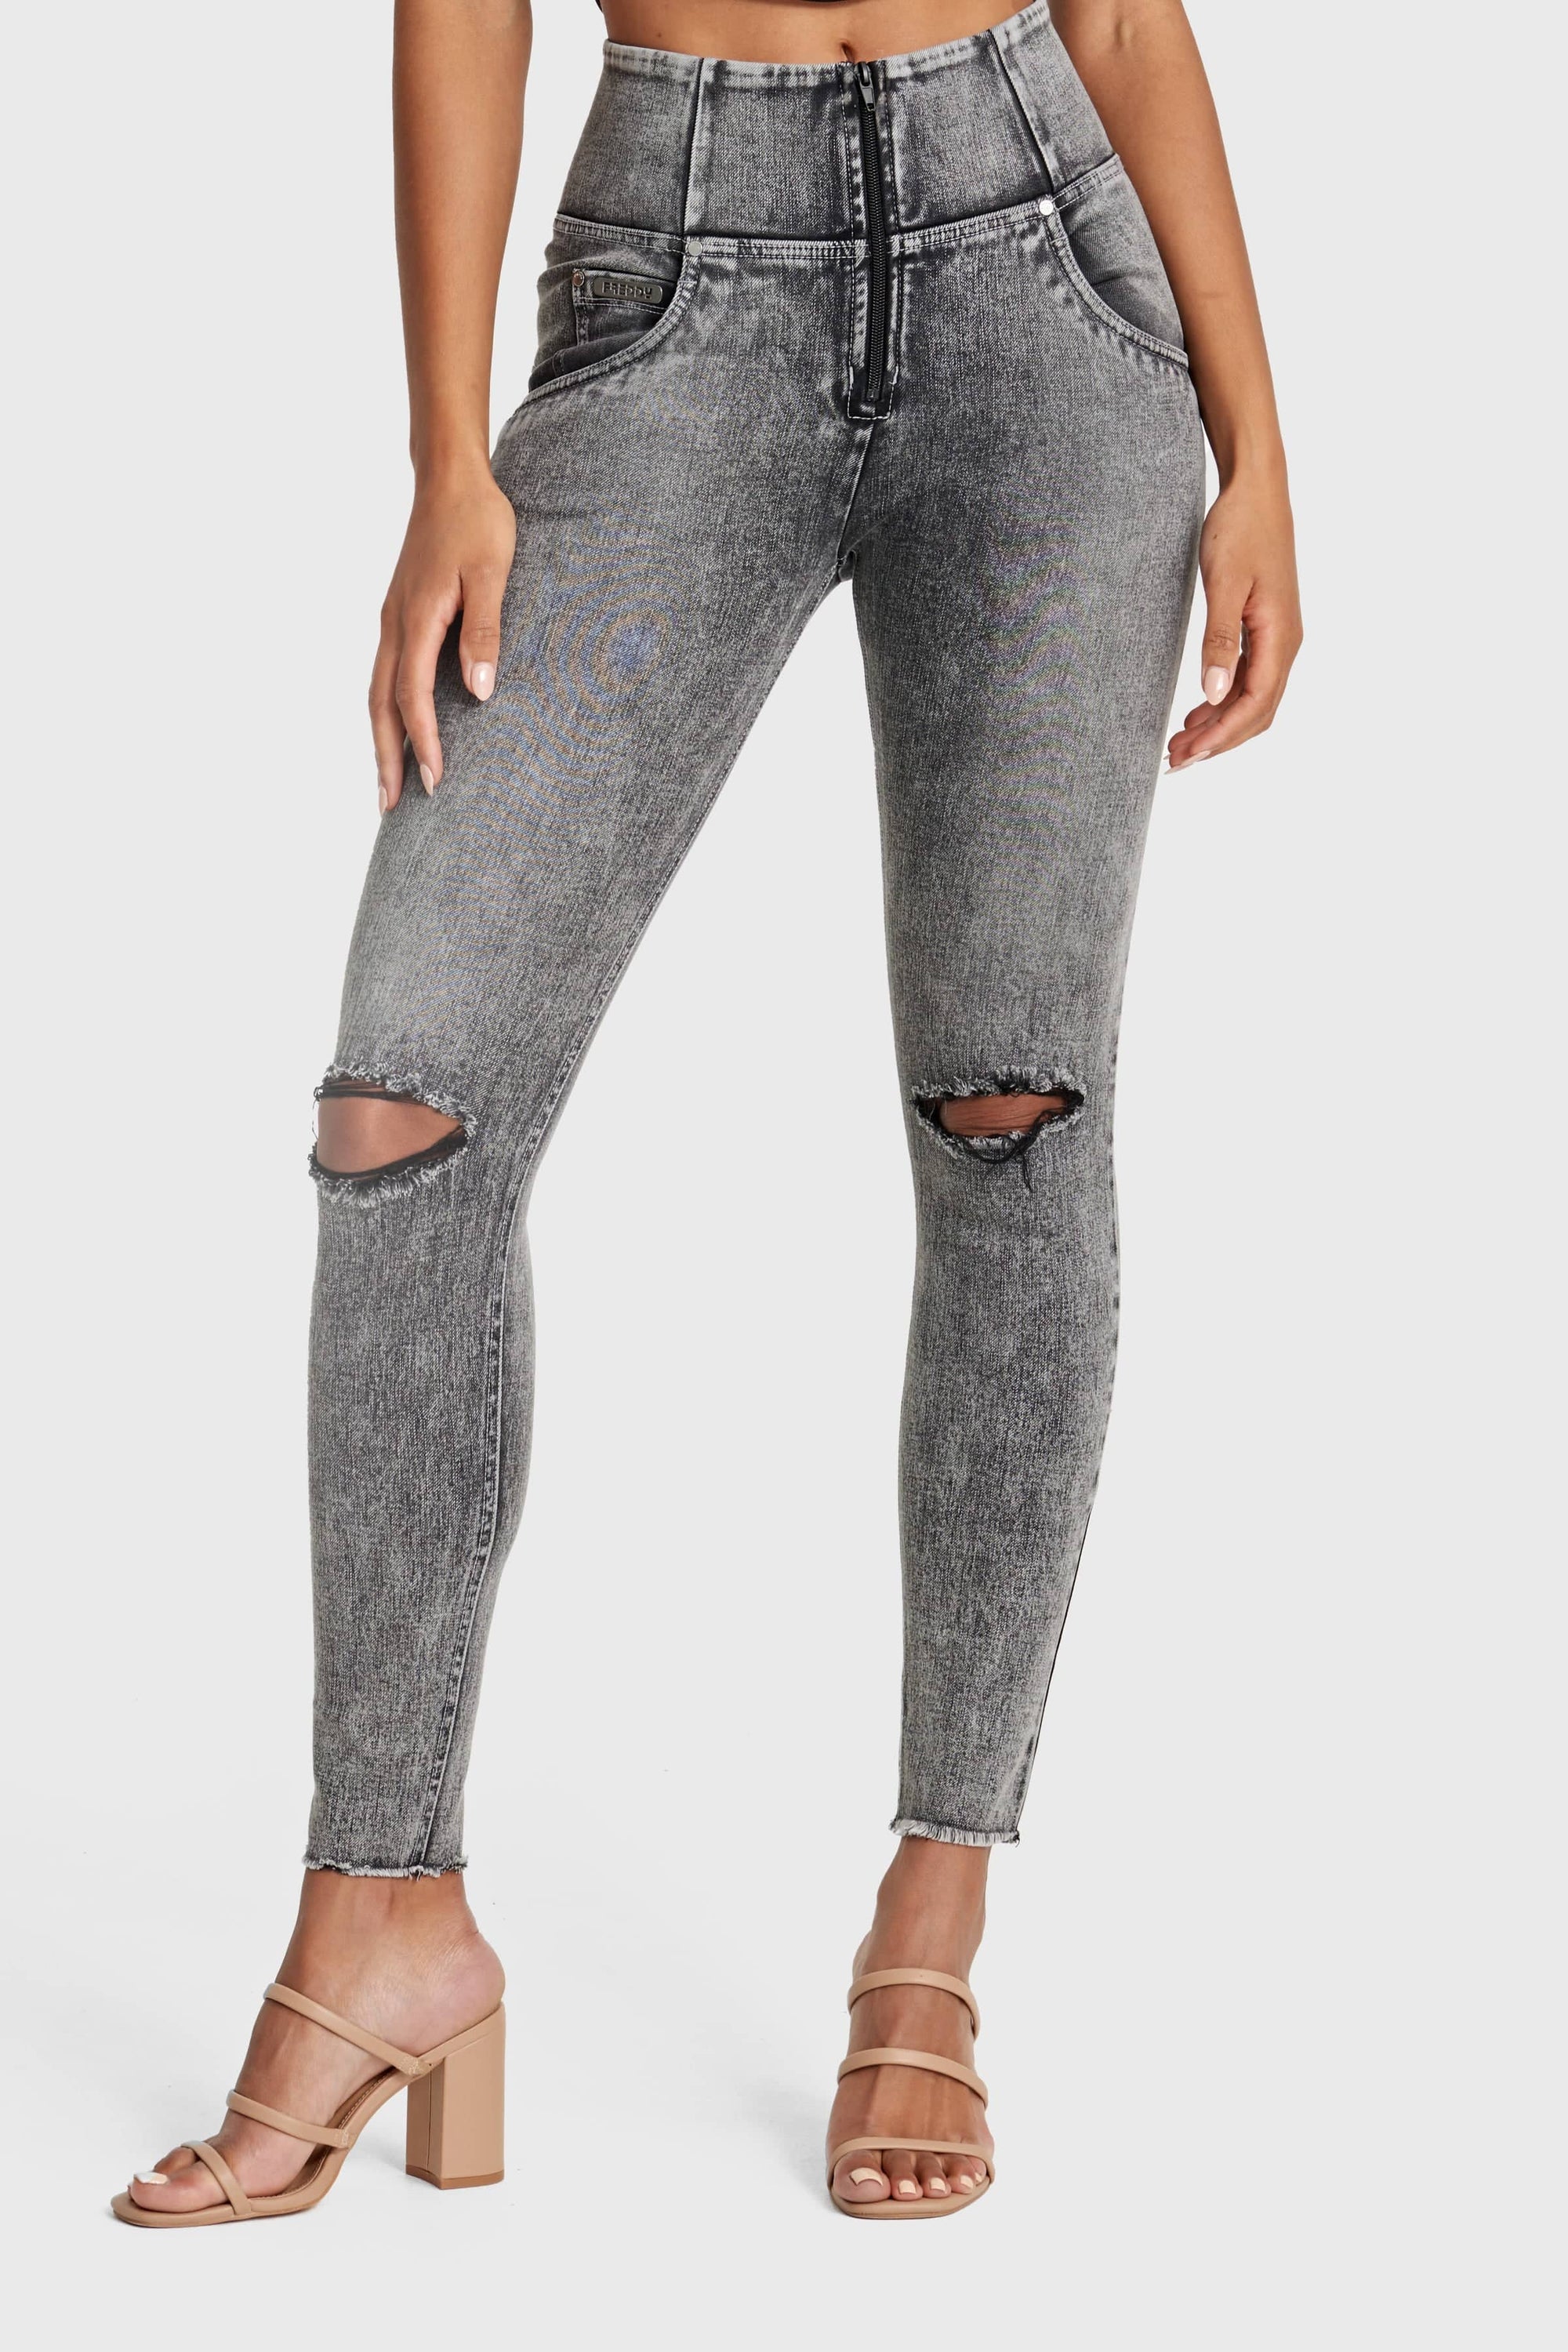 WR.UP® Snug Ripped Jeans - High Waisted - Full Length - Grey Stonewash + Grey Stitching 6